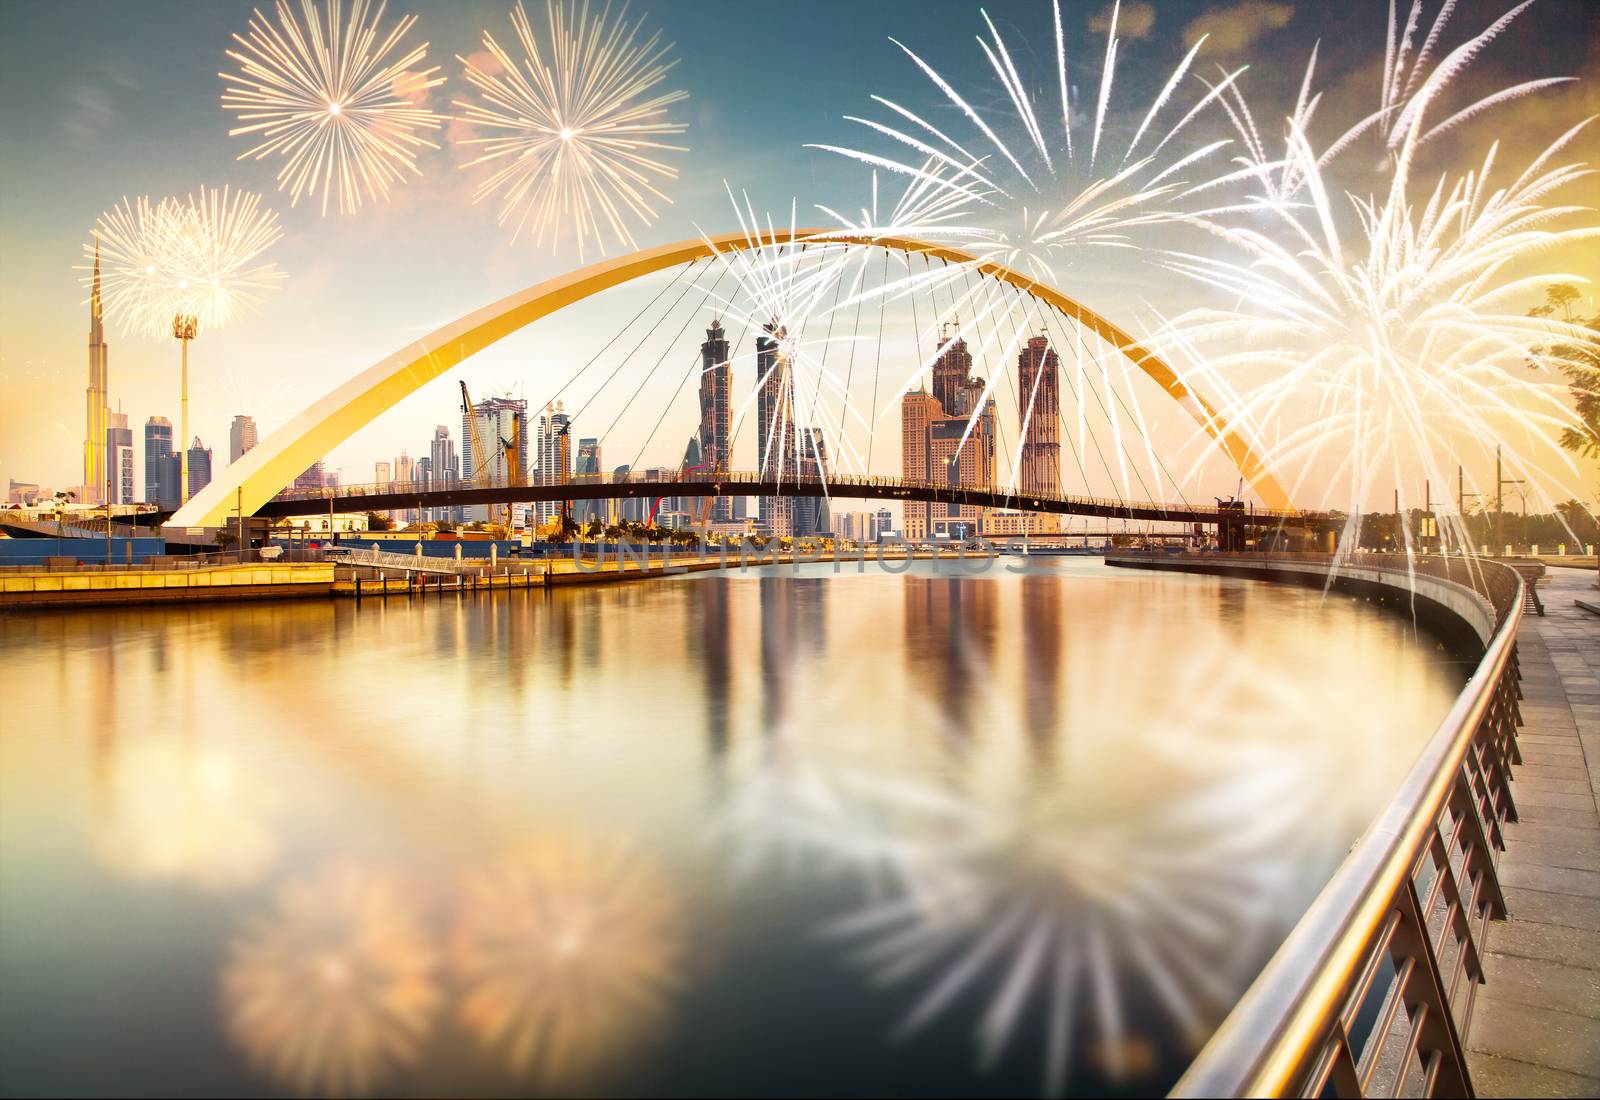 fireworks around Tolerance bridge - exotic New Year destination, Dubai, UAE